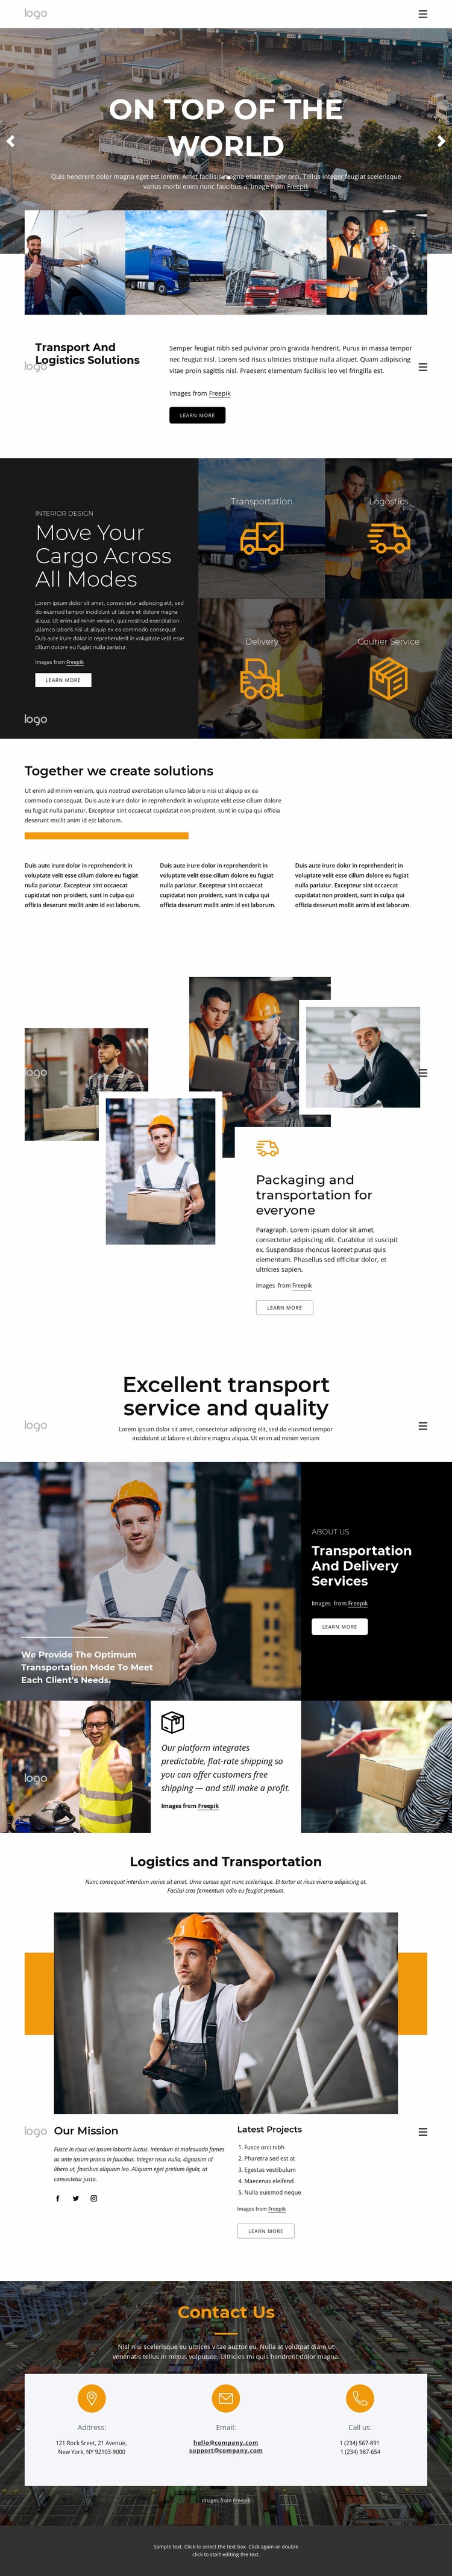 Transportation and logistics management Web Page Design